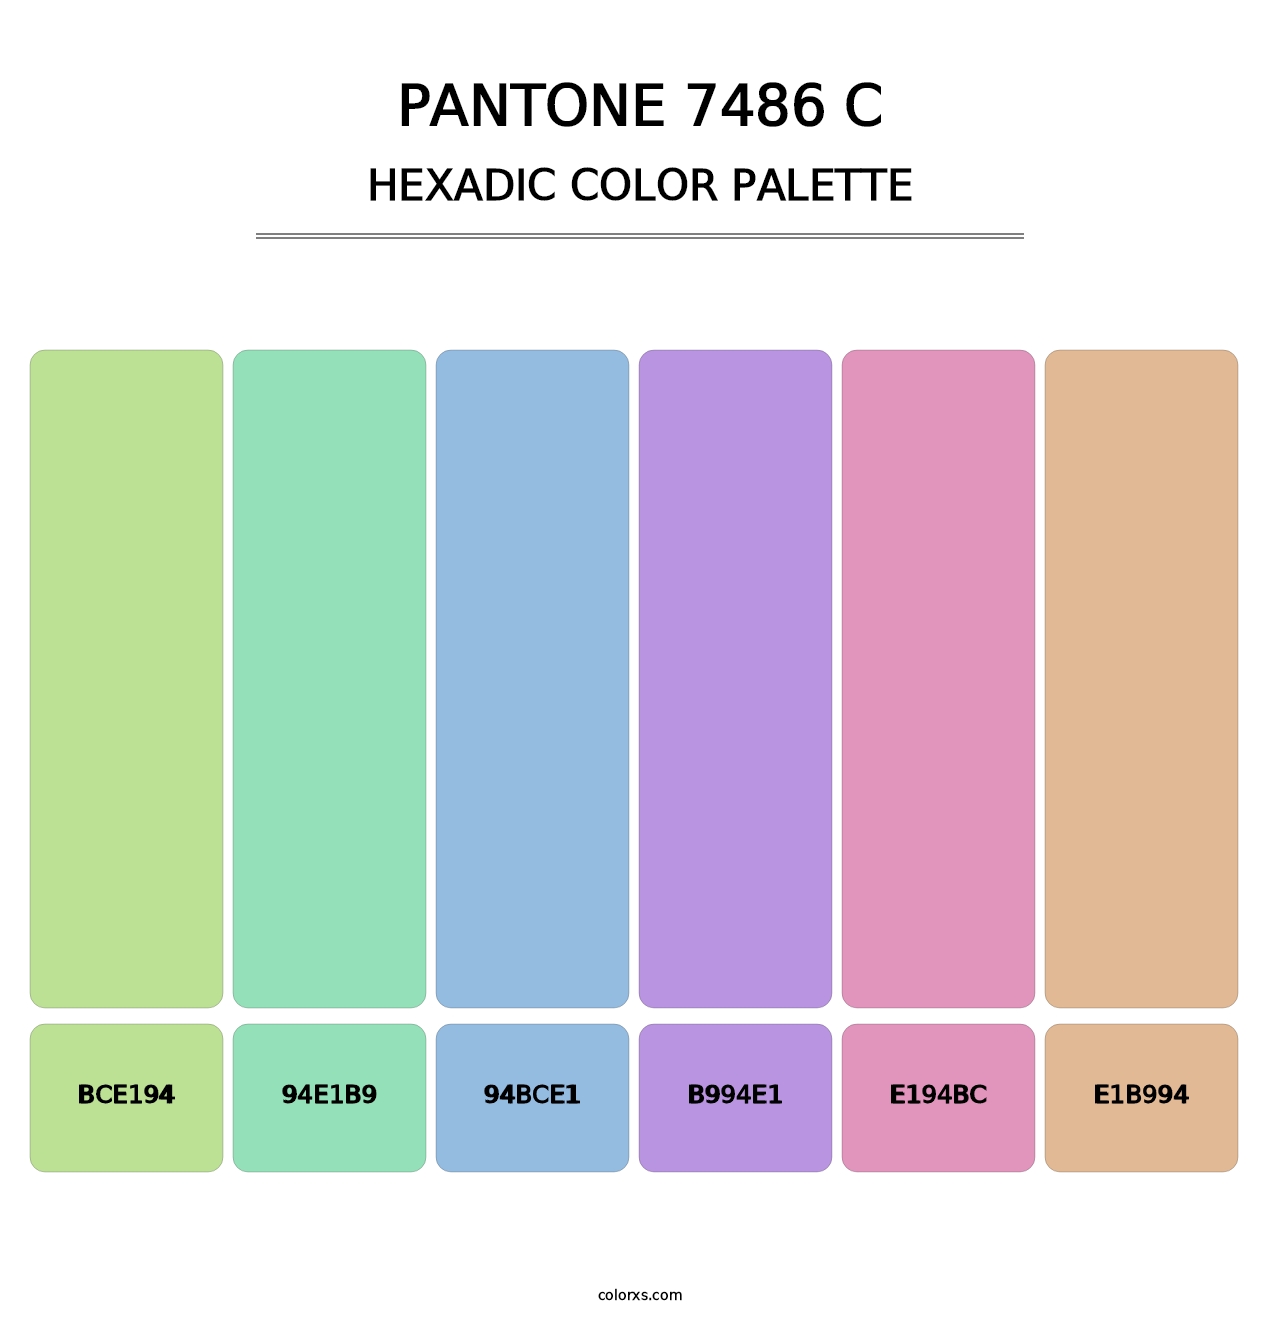 PANTONE 7486 C - Hexadic Color Palette